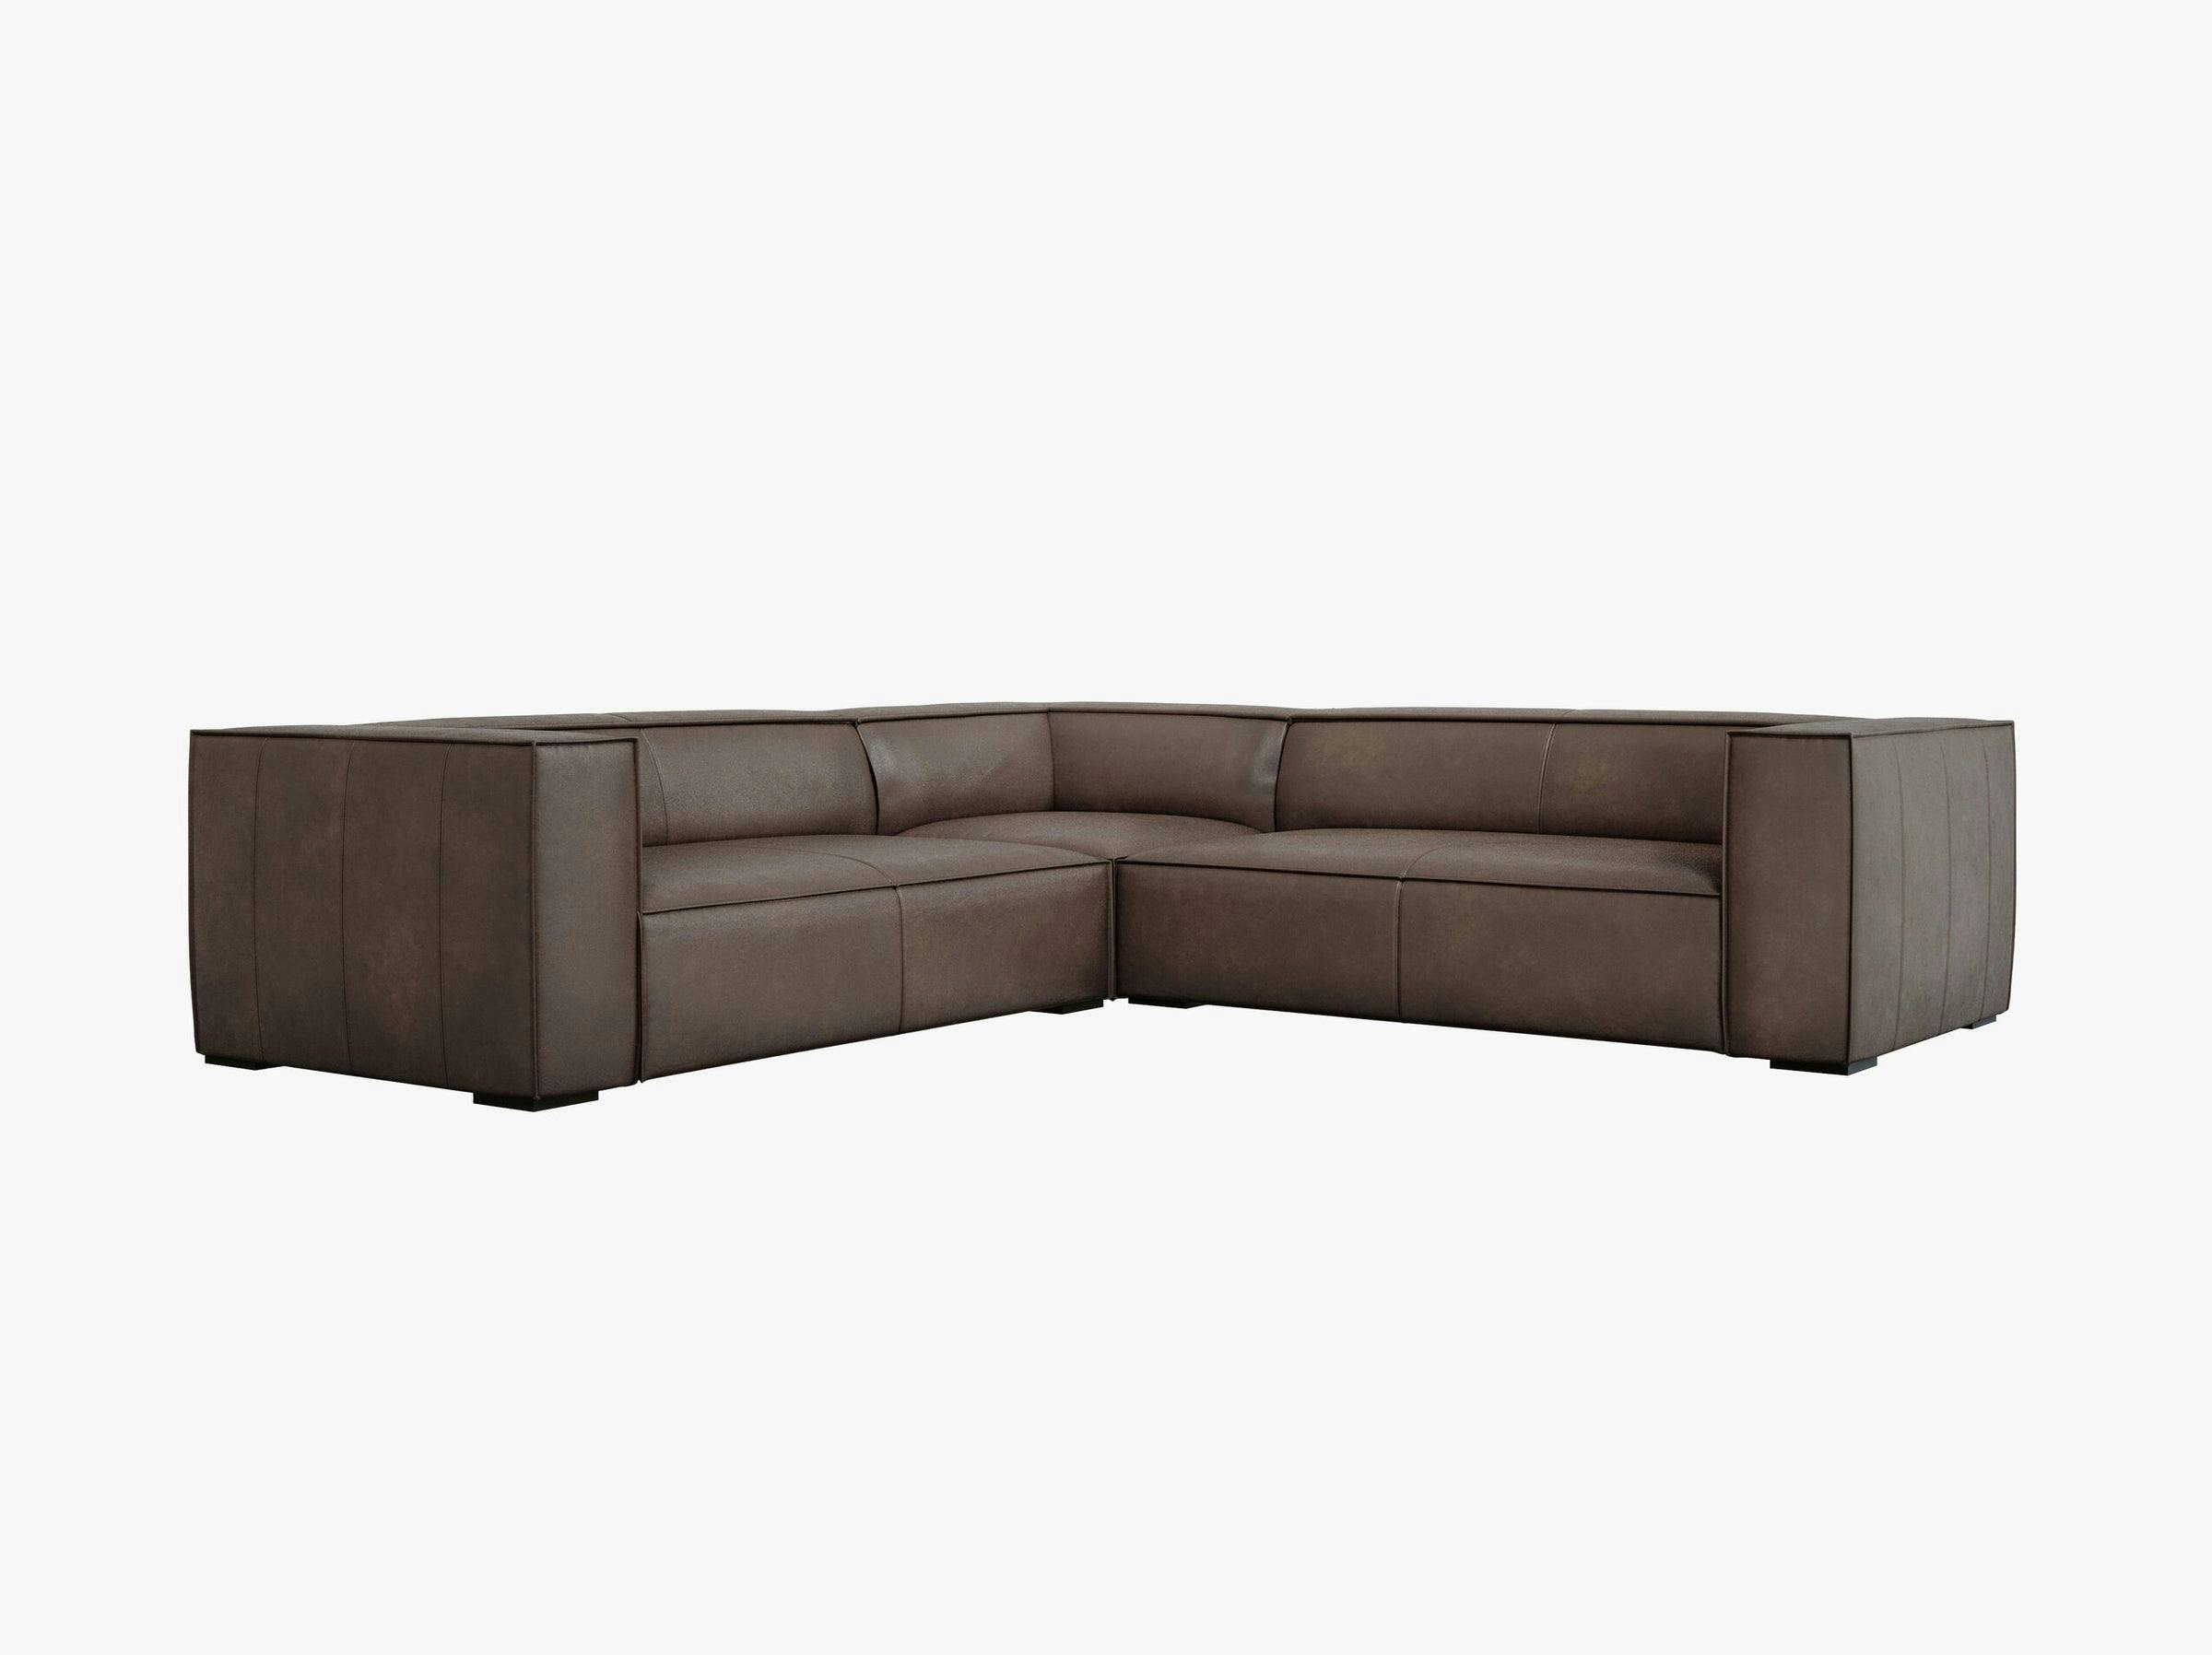 Agawa sofas genuine leather grey brown